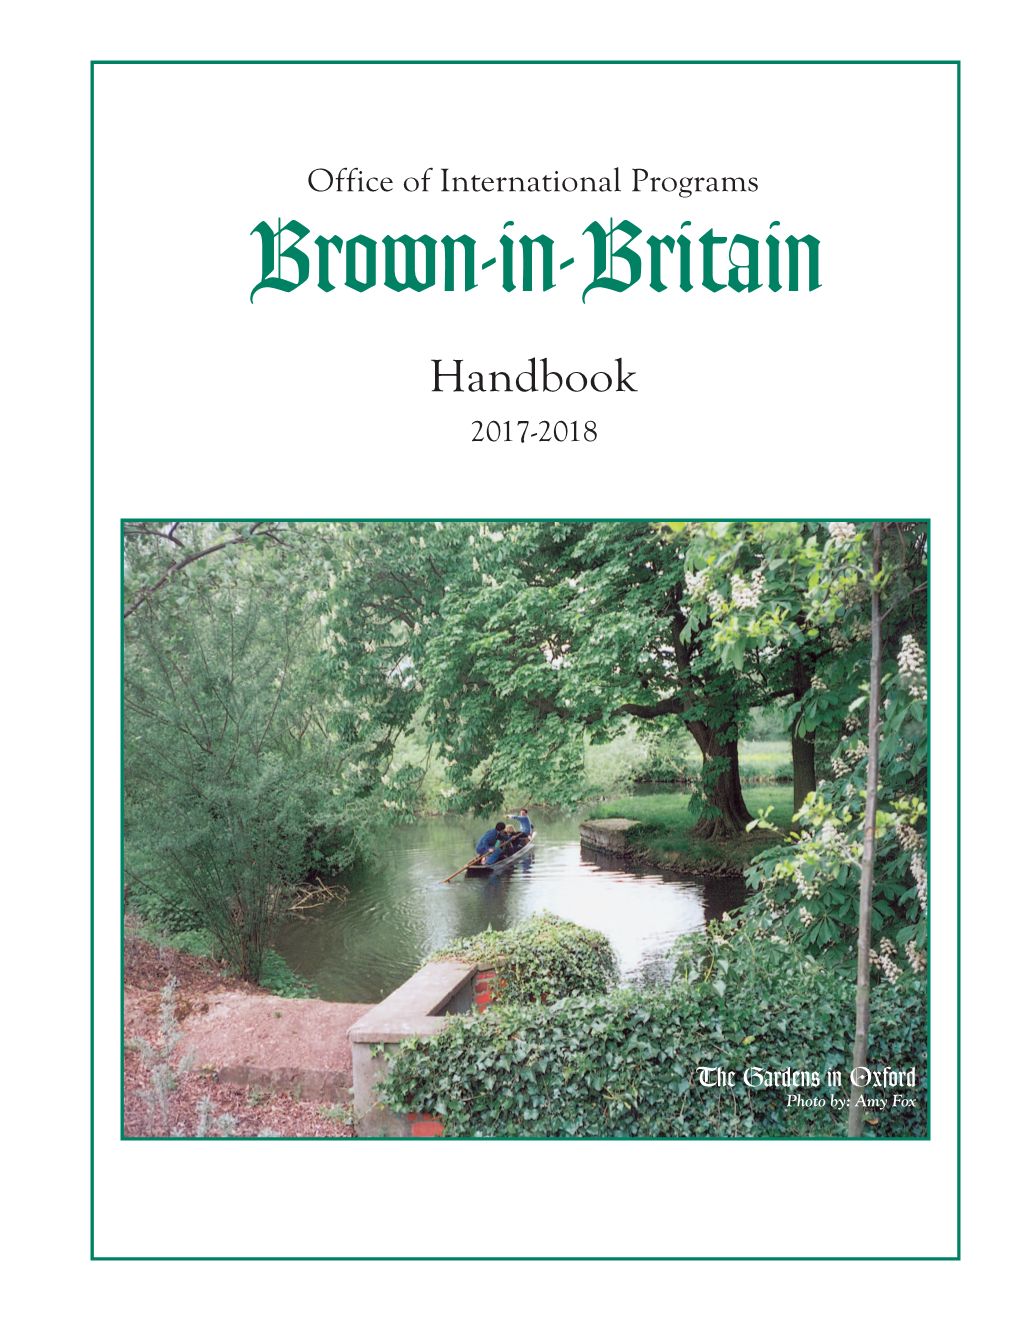 Brown-In-Britain Handbook 2017-2018